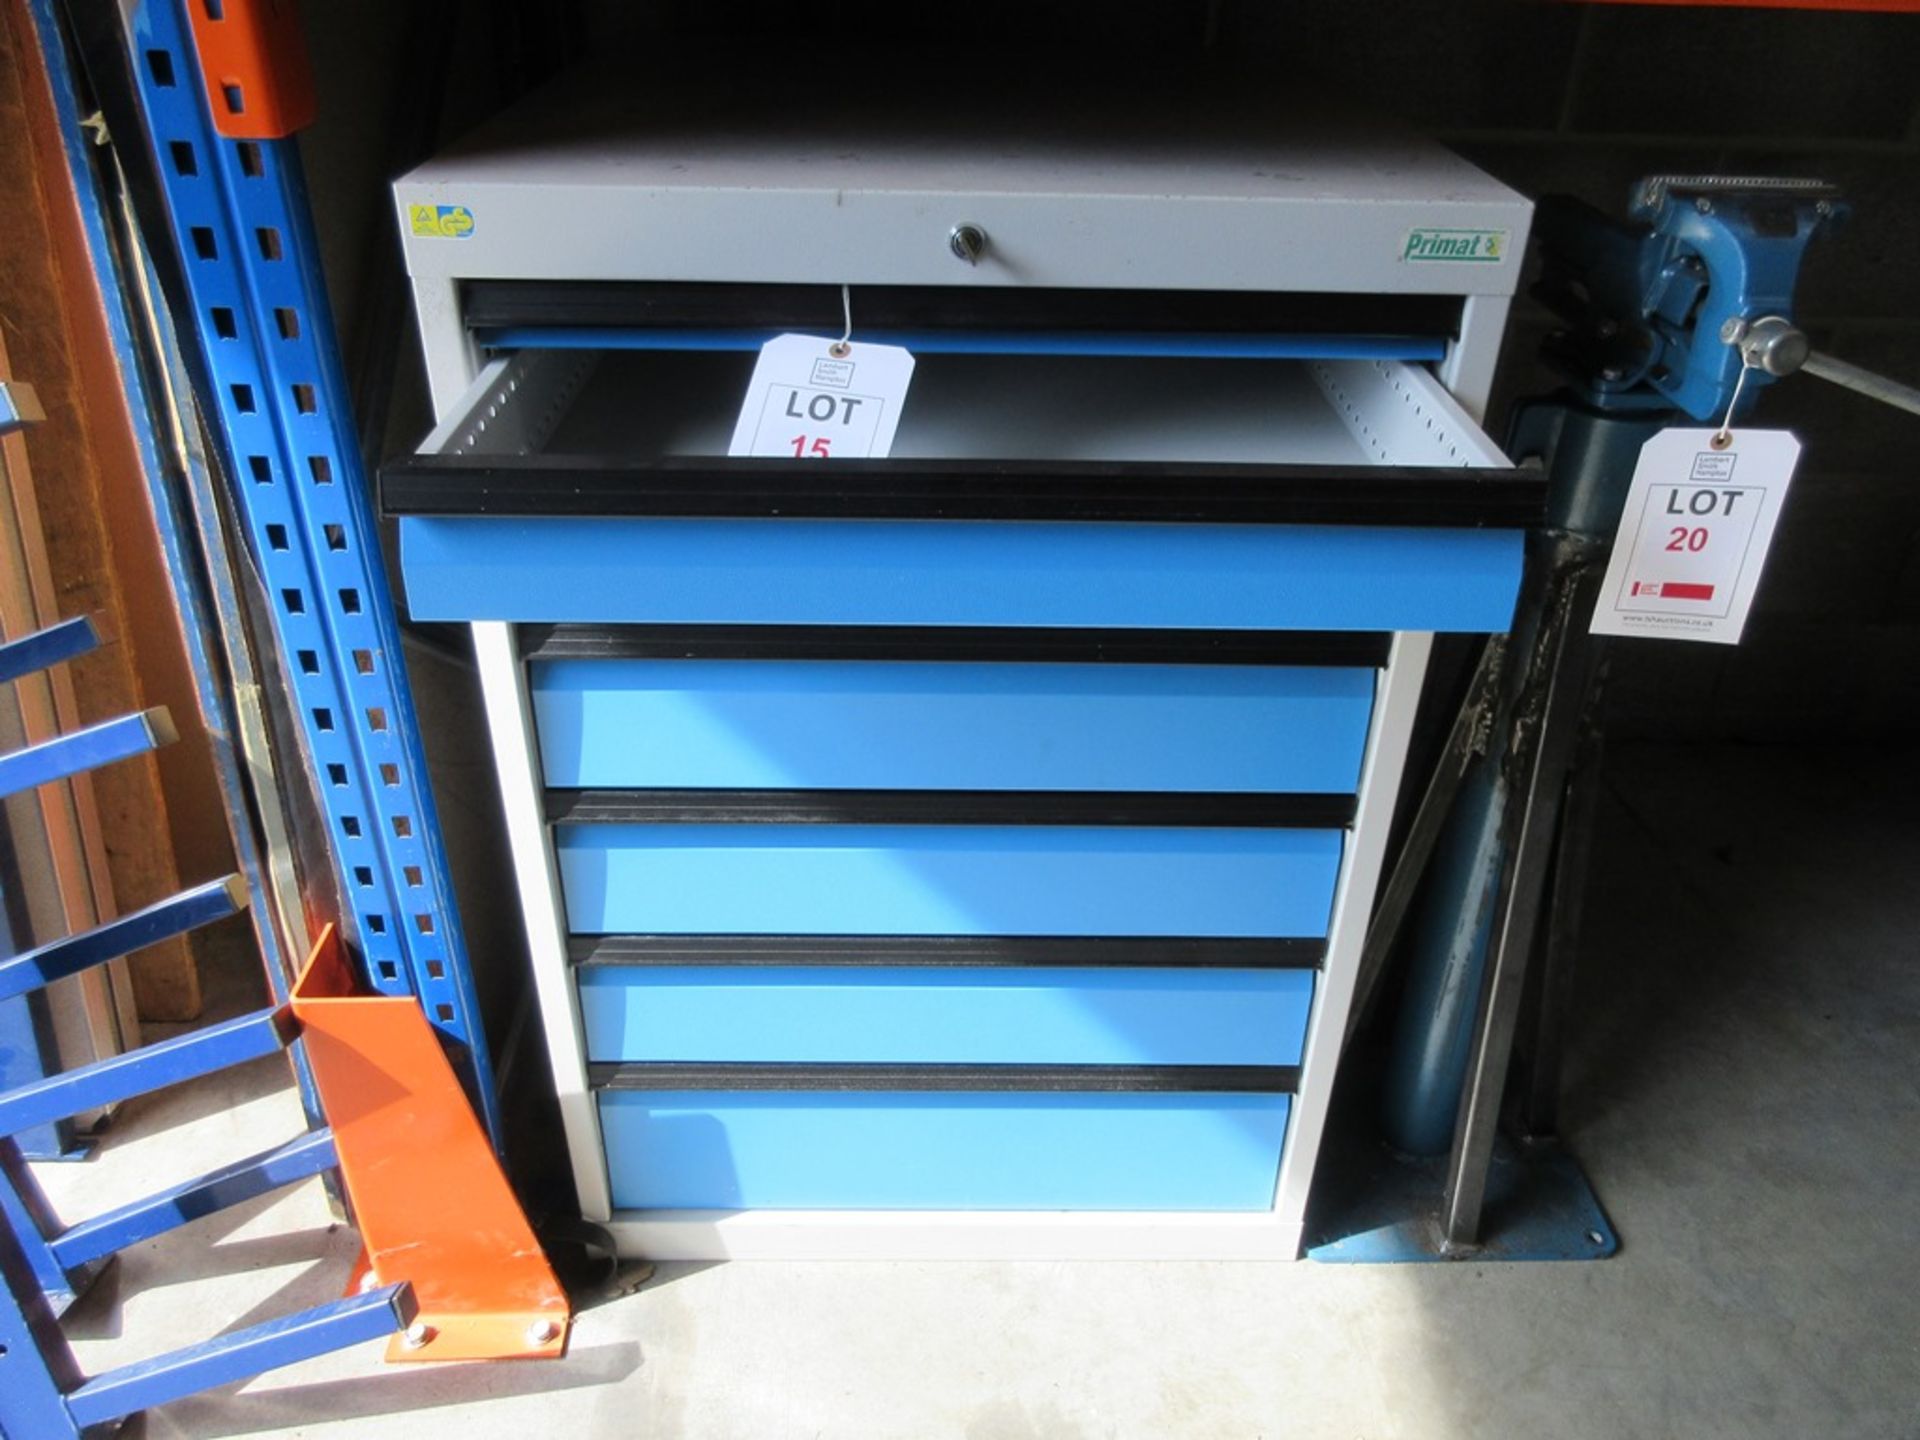 Primat 7 Drawer Tool Cabinet: W70cm x H102cm x D74cm - Image 2 of 3